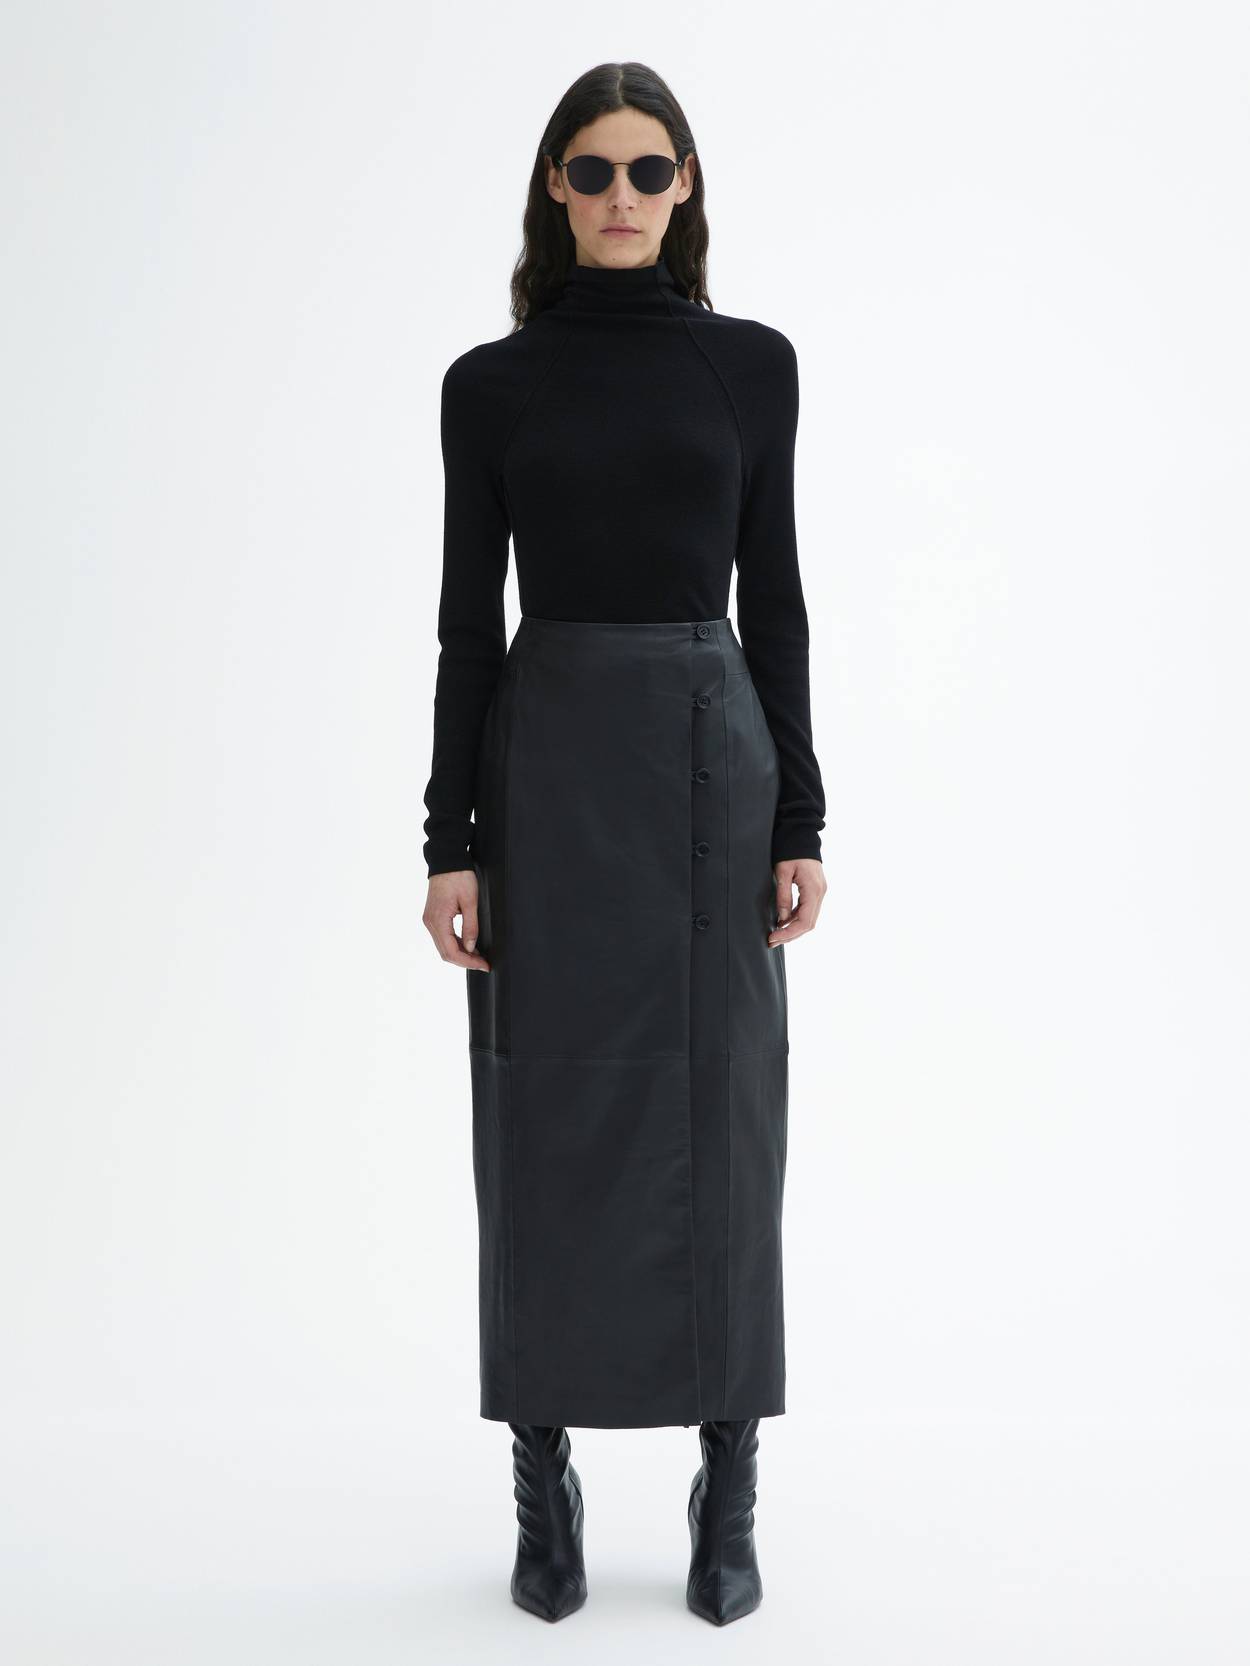 Leather Skirt - Black